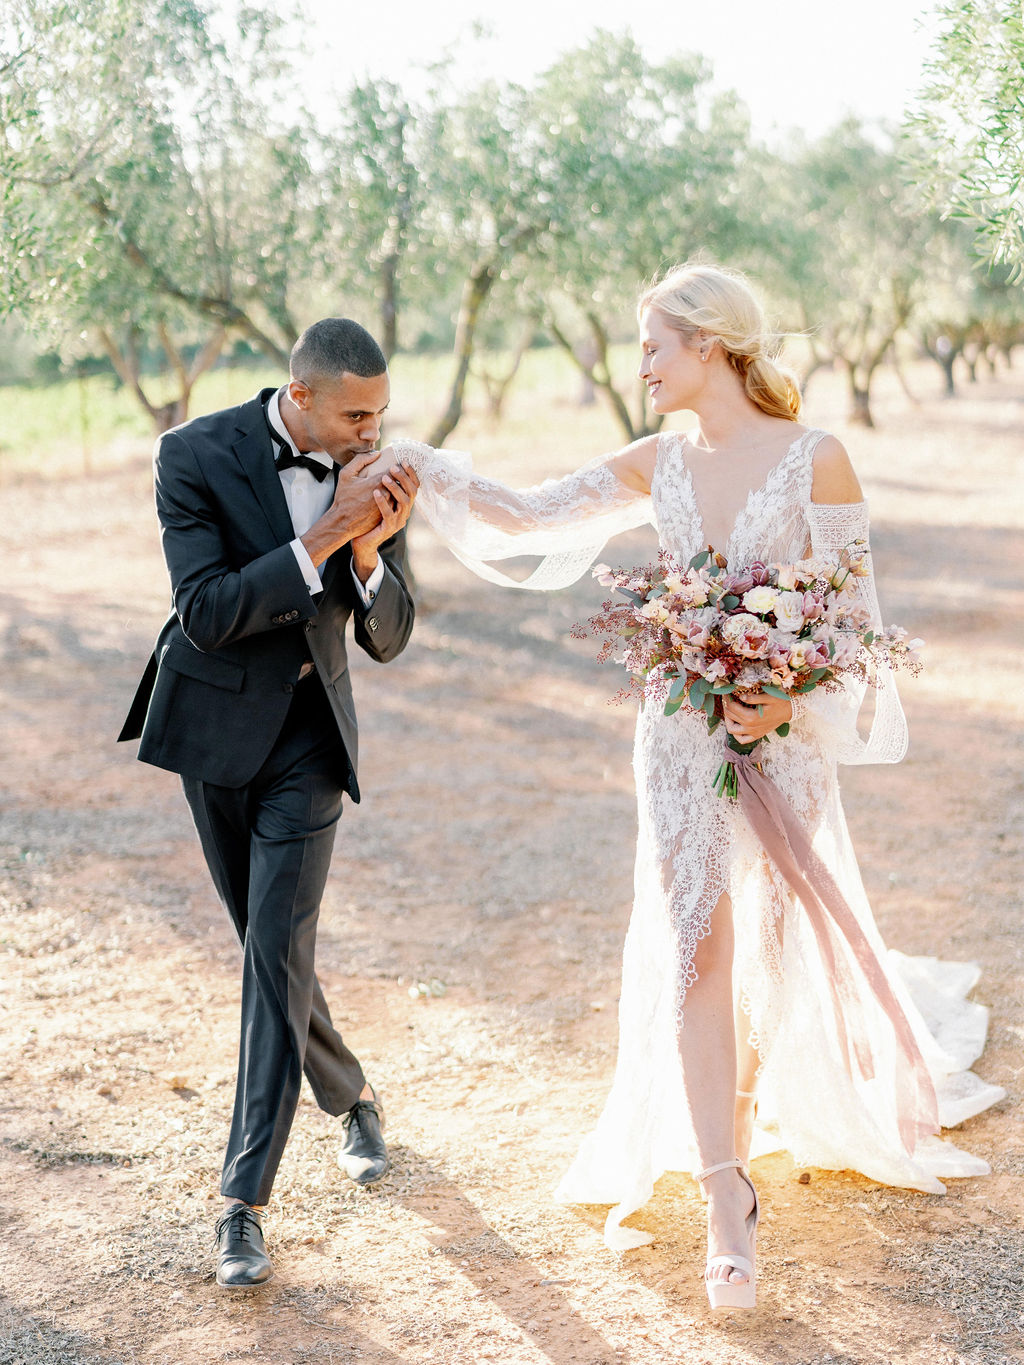 Wedding In Greece - Hand Kiss